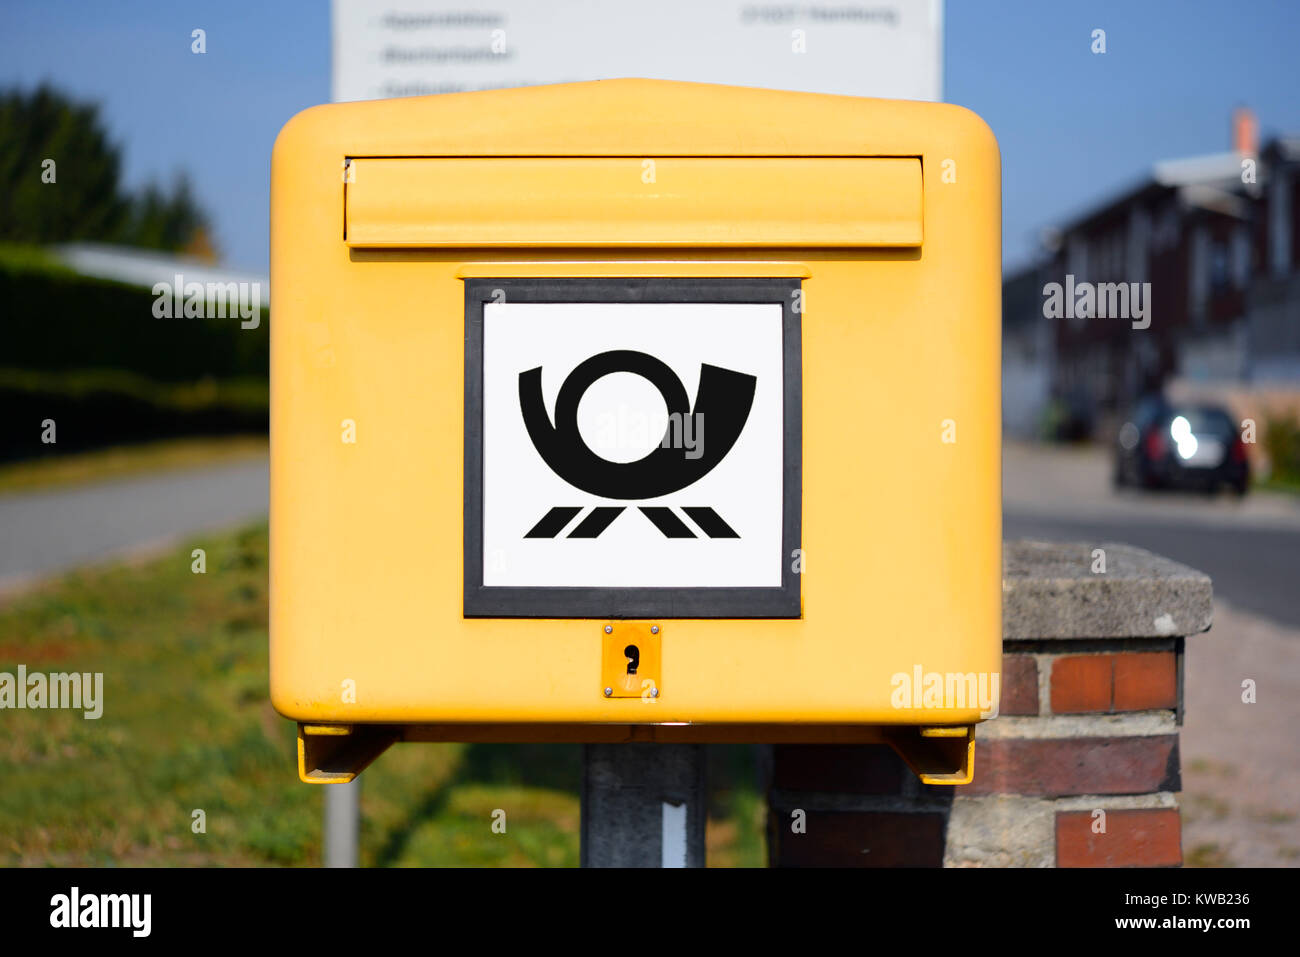 Deutsche Post Briefkasten High Resolution Stock Photography and Images -  Alamy